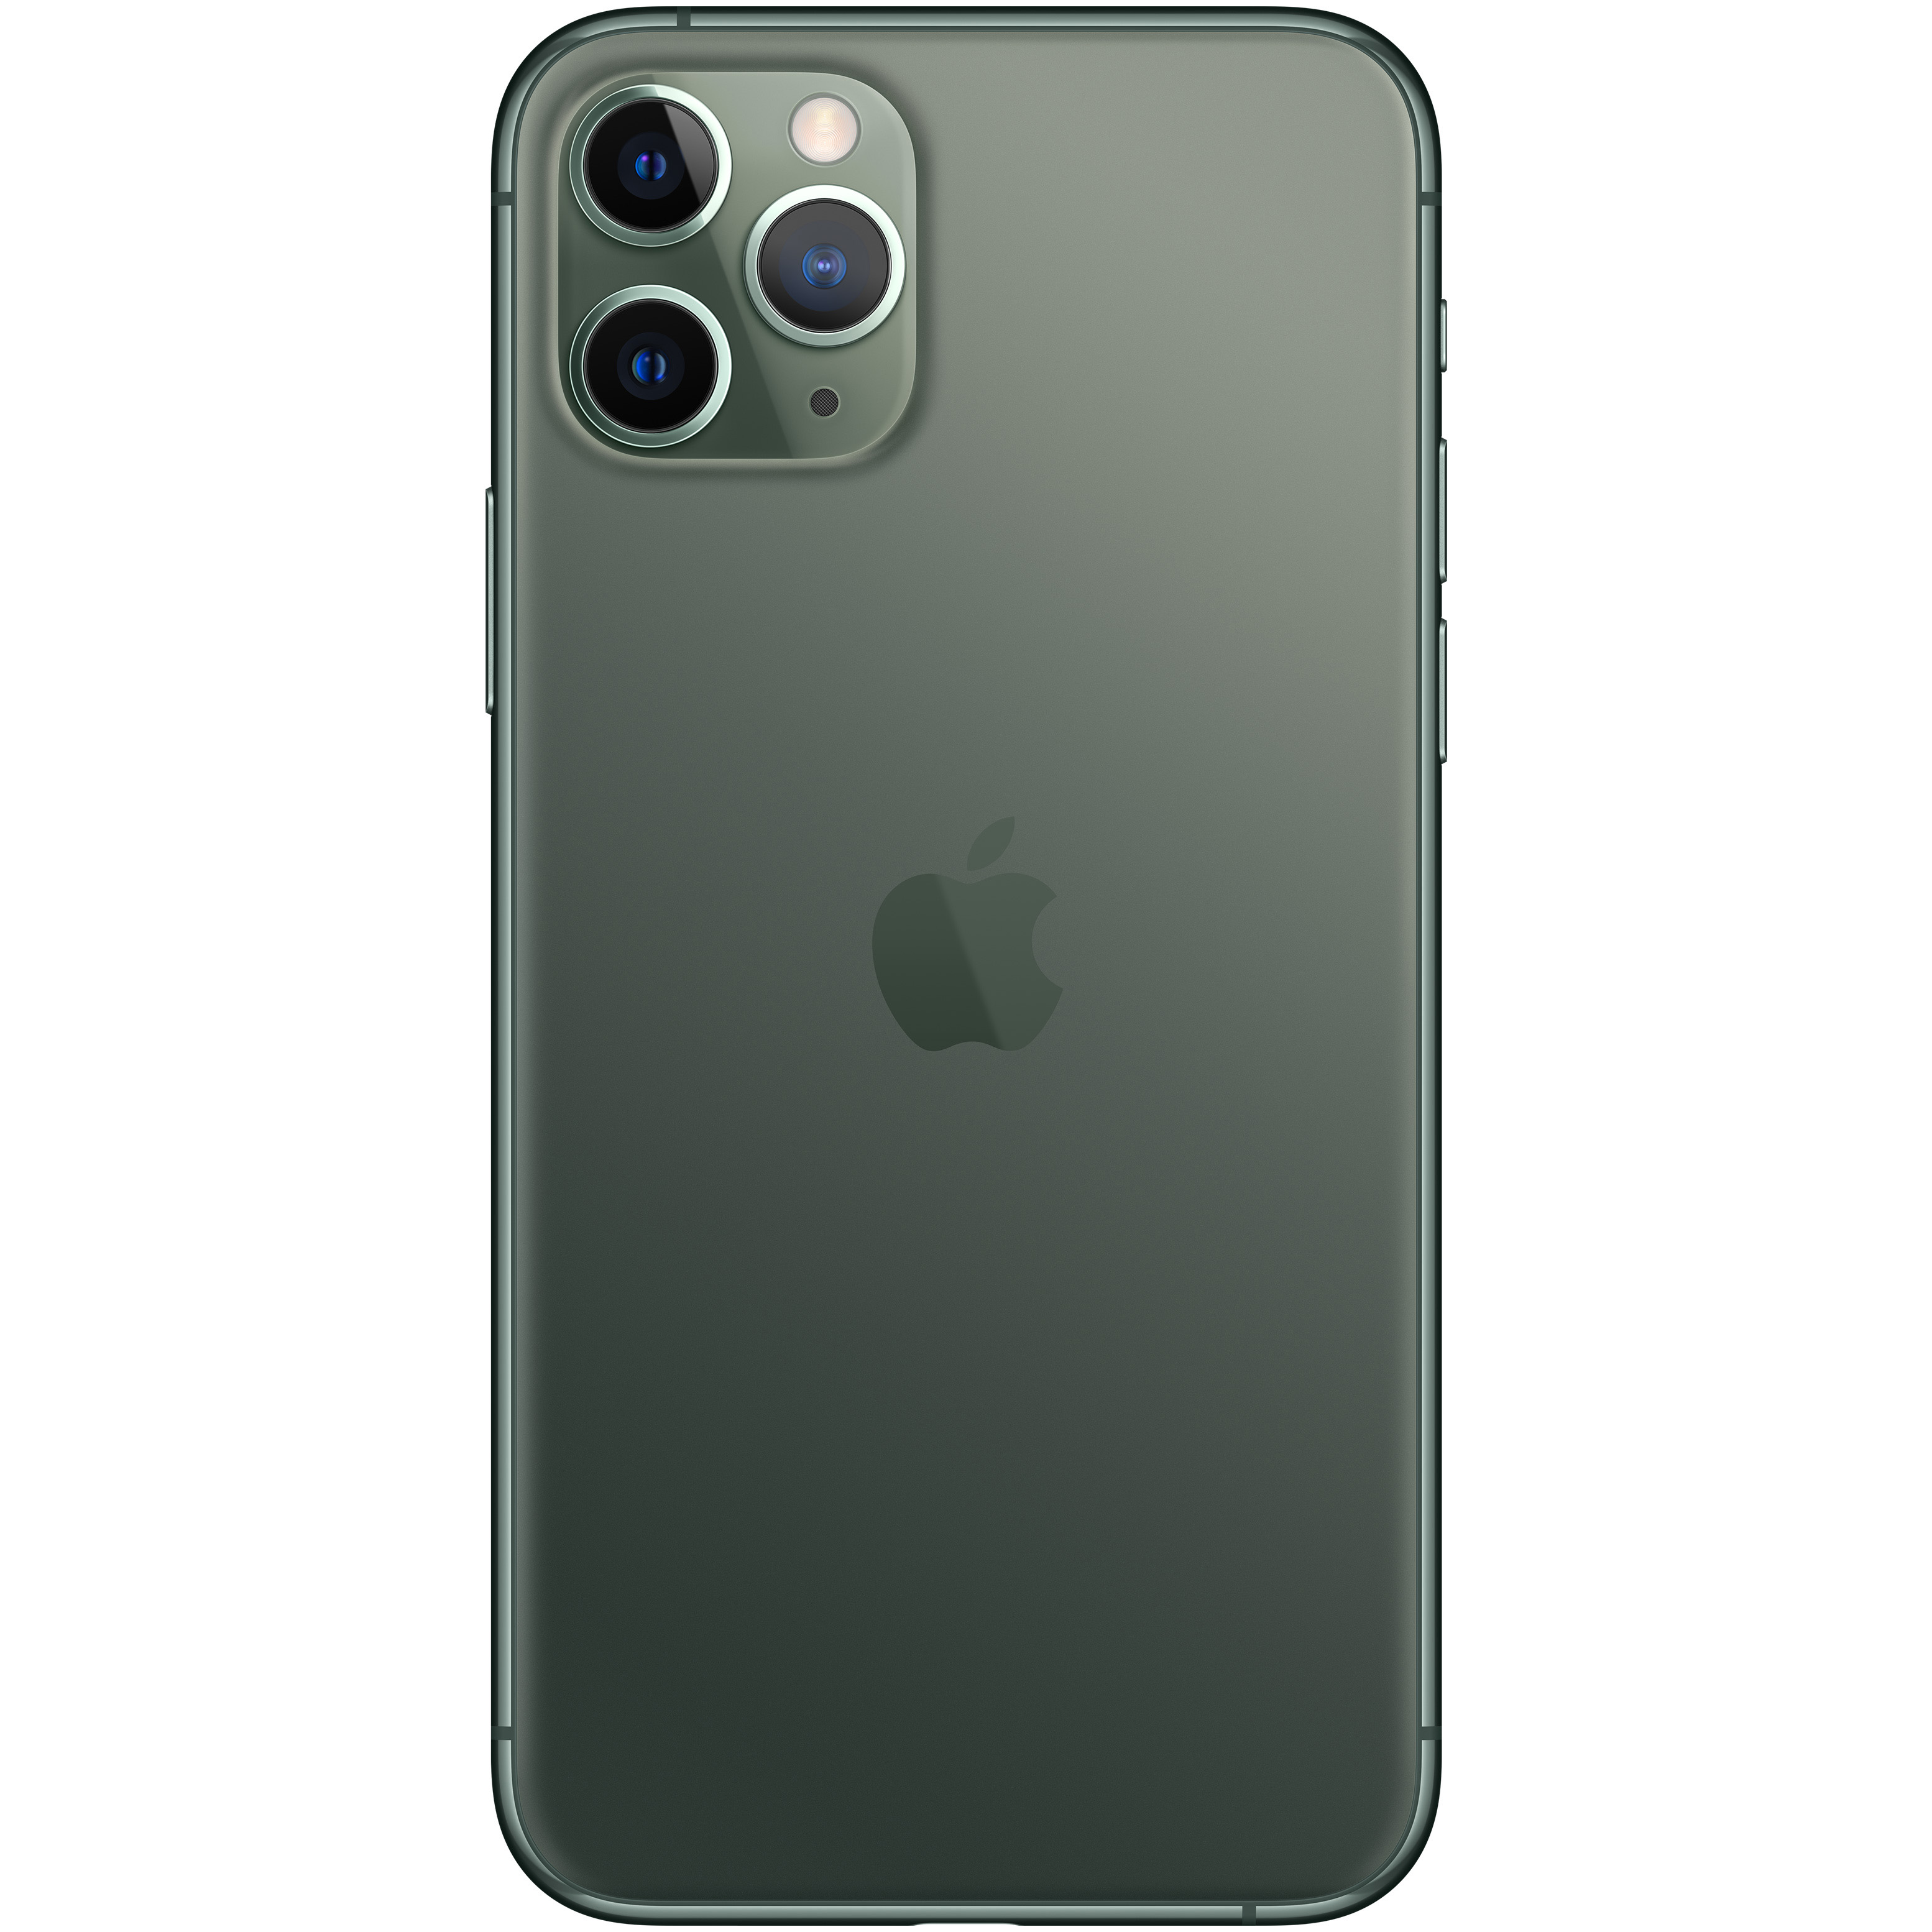 Айфон 11 цена в москве 128 оригинал. Iphone 11 Pro Max 256gb. Iphone 11 Pro 64gb. Apple iphone 11 Pro Max 64gb Midnight Green. Iphone 11 Pro Max Space Gray.